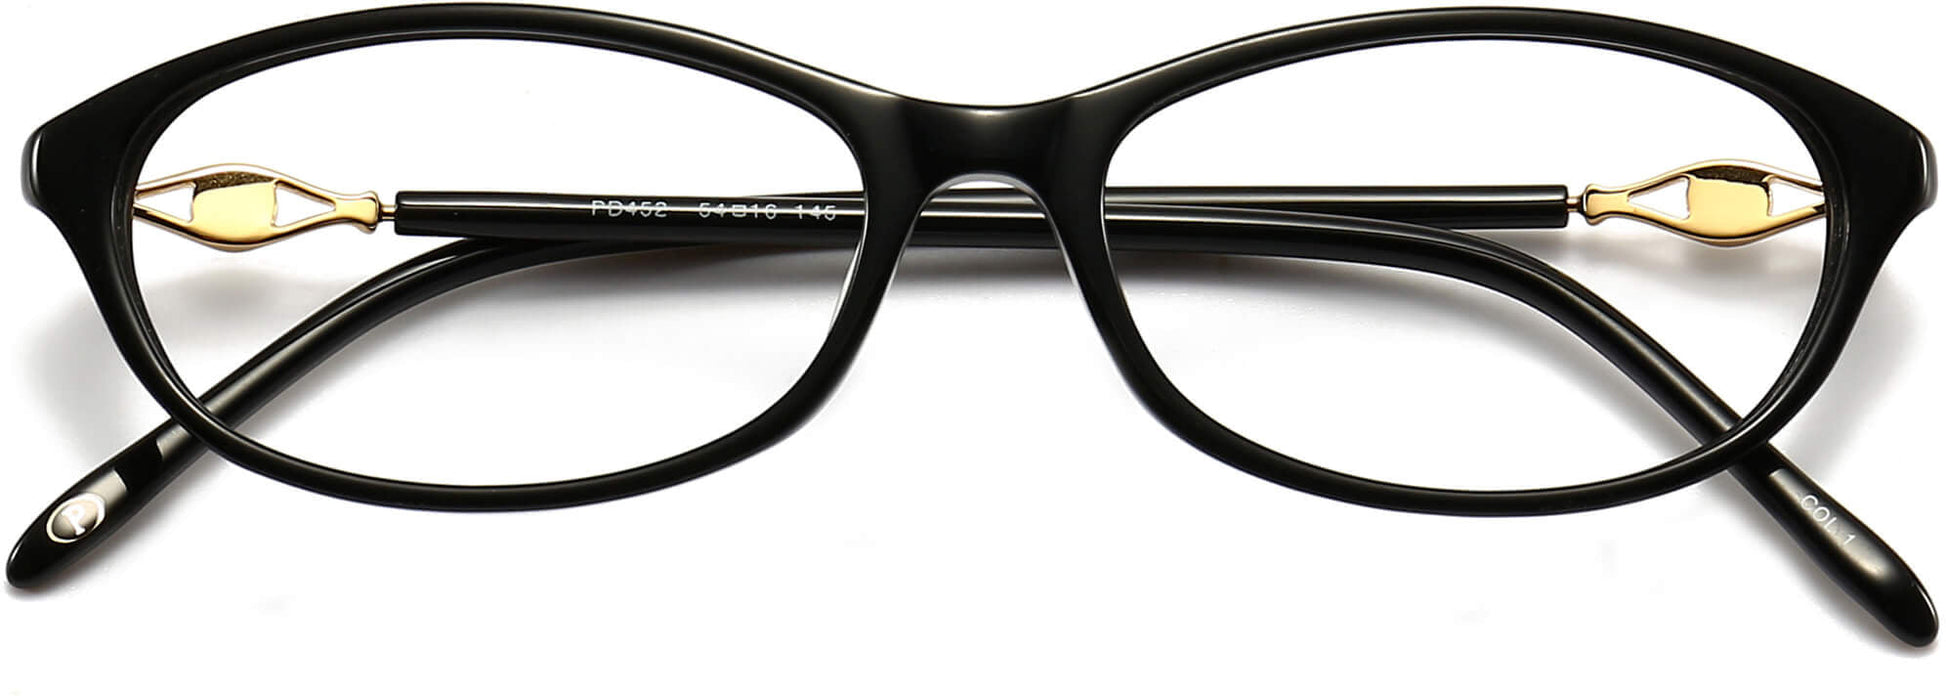 Ellis Cateye Black Eyeglasses from ANRRI, closed view